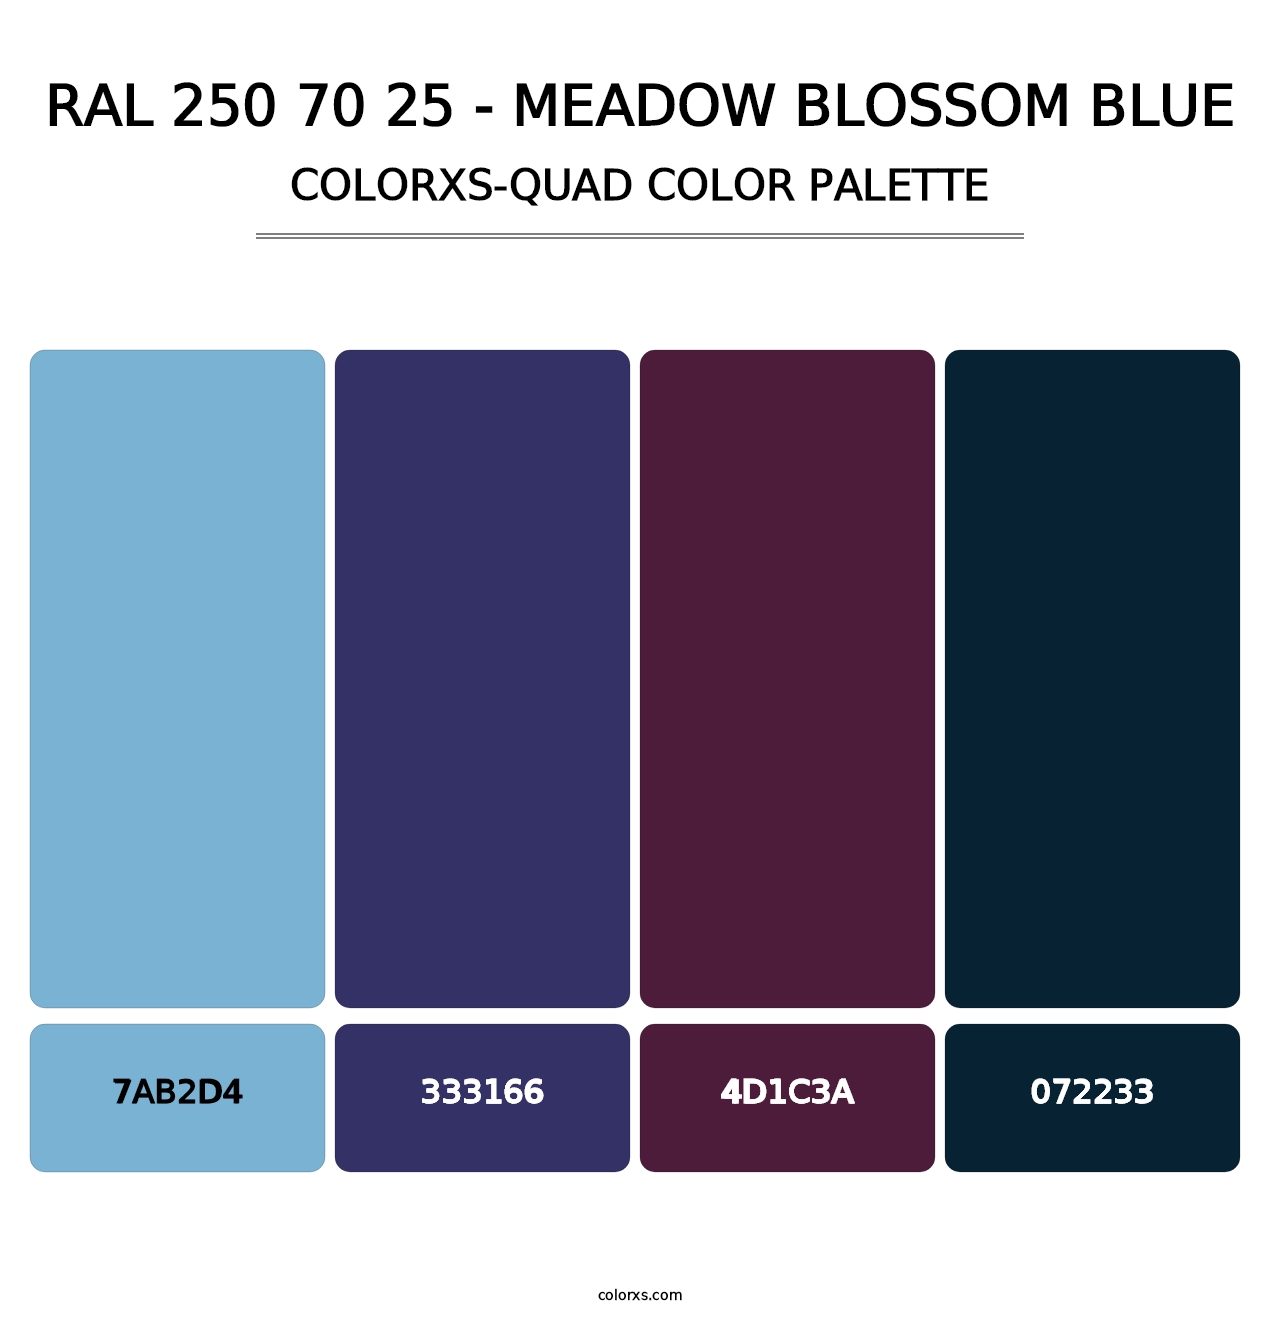 RAL 250 70 25 - Meadow Blossom Blue - Colorxs Quad Palette